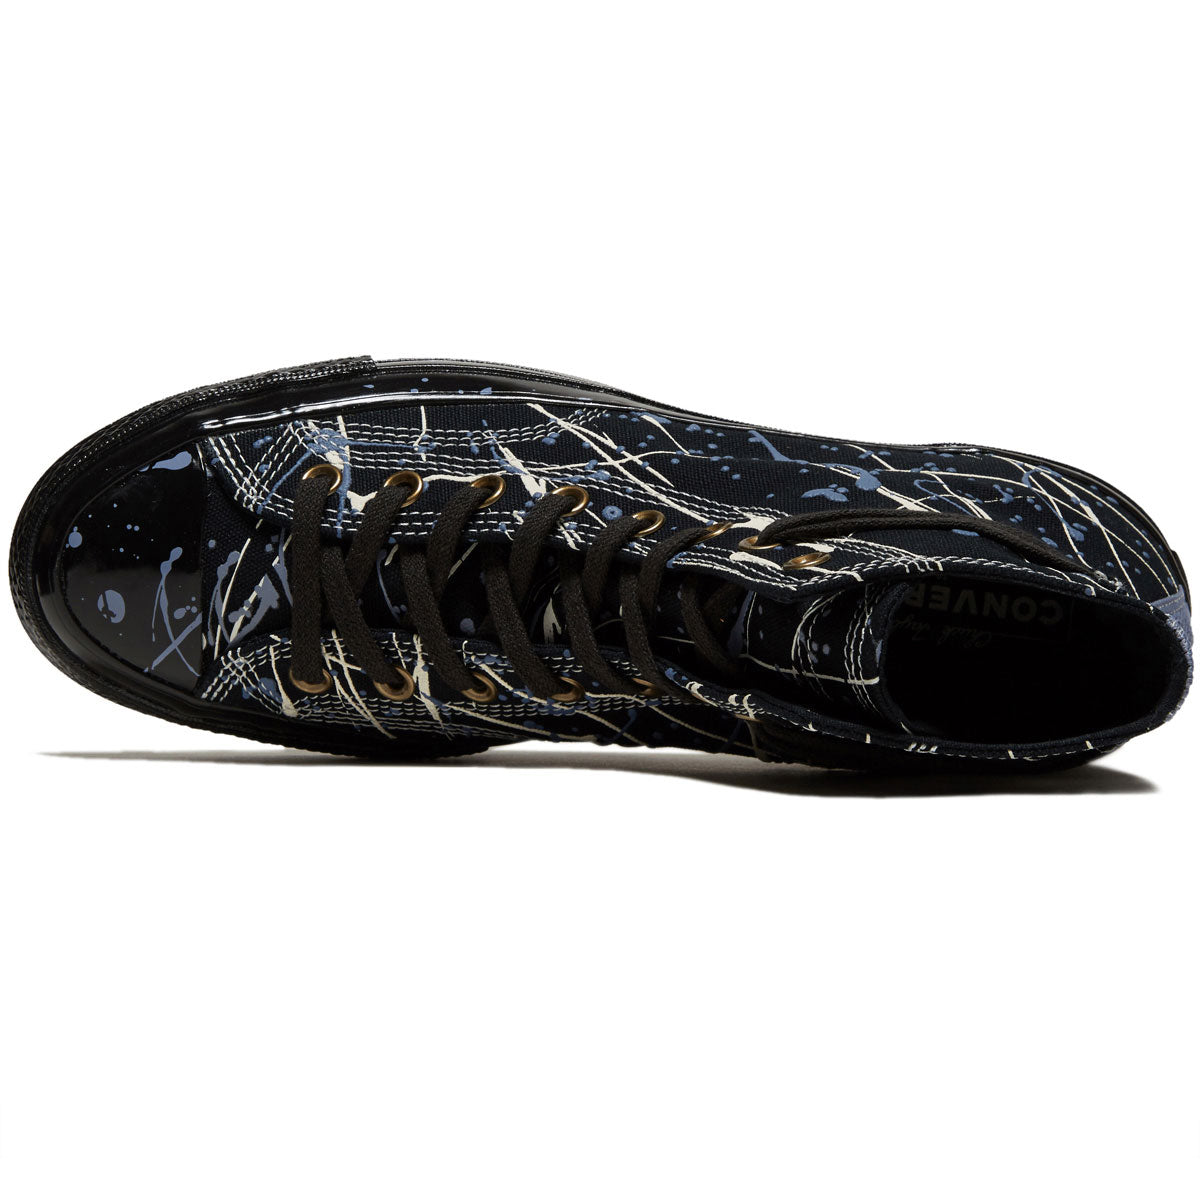 Converse Chuck 70 Hi Paint Splatter Shoes - Black/Egret/Thunder Daze image 3